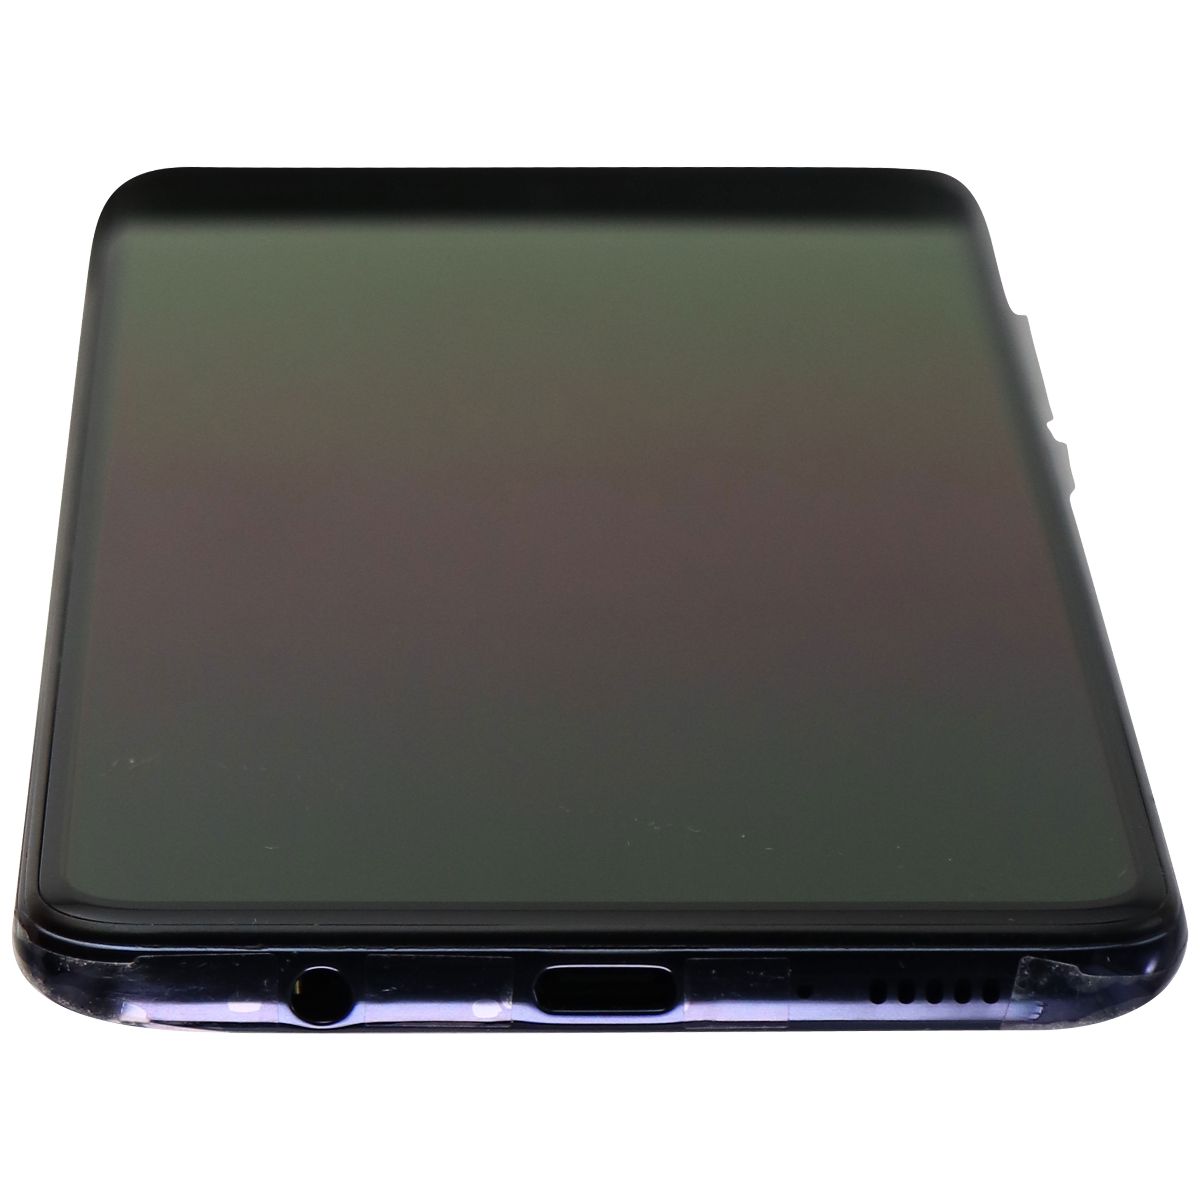 Samsung Galaxy A51 (6.5-inch) SM-A515U (Unlocked) - 128GB / Black Cell Phones & Smartphones Samsung    - Simple Cell Bulk Wholesale Pricing - USA Seller